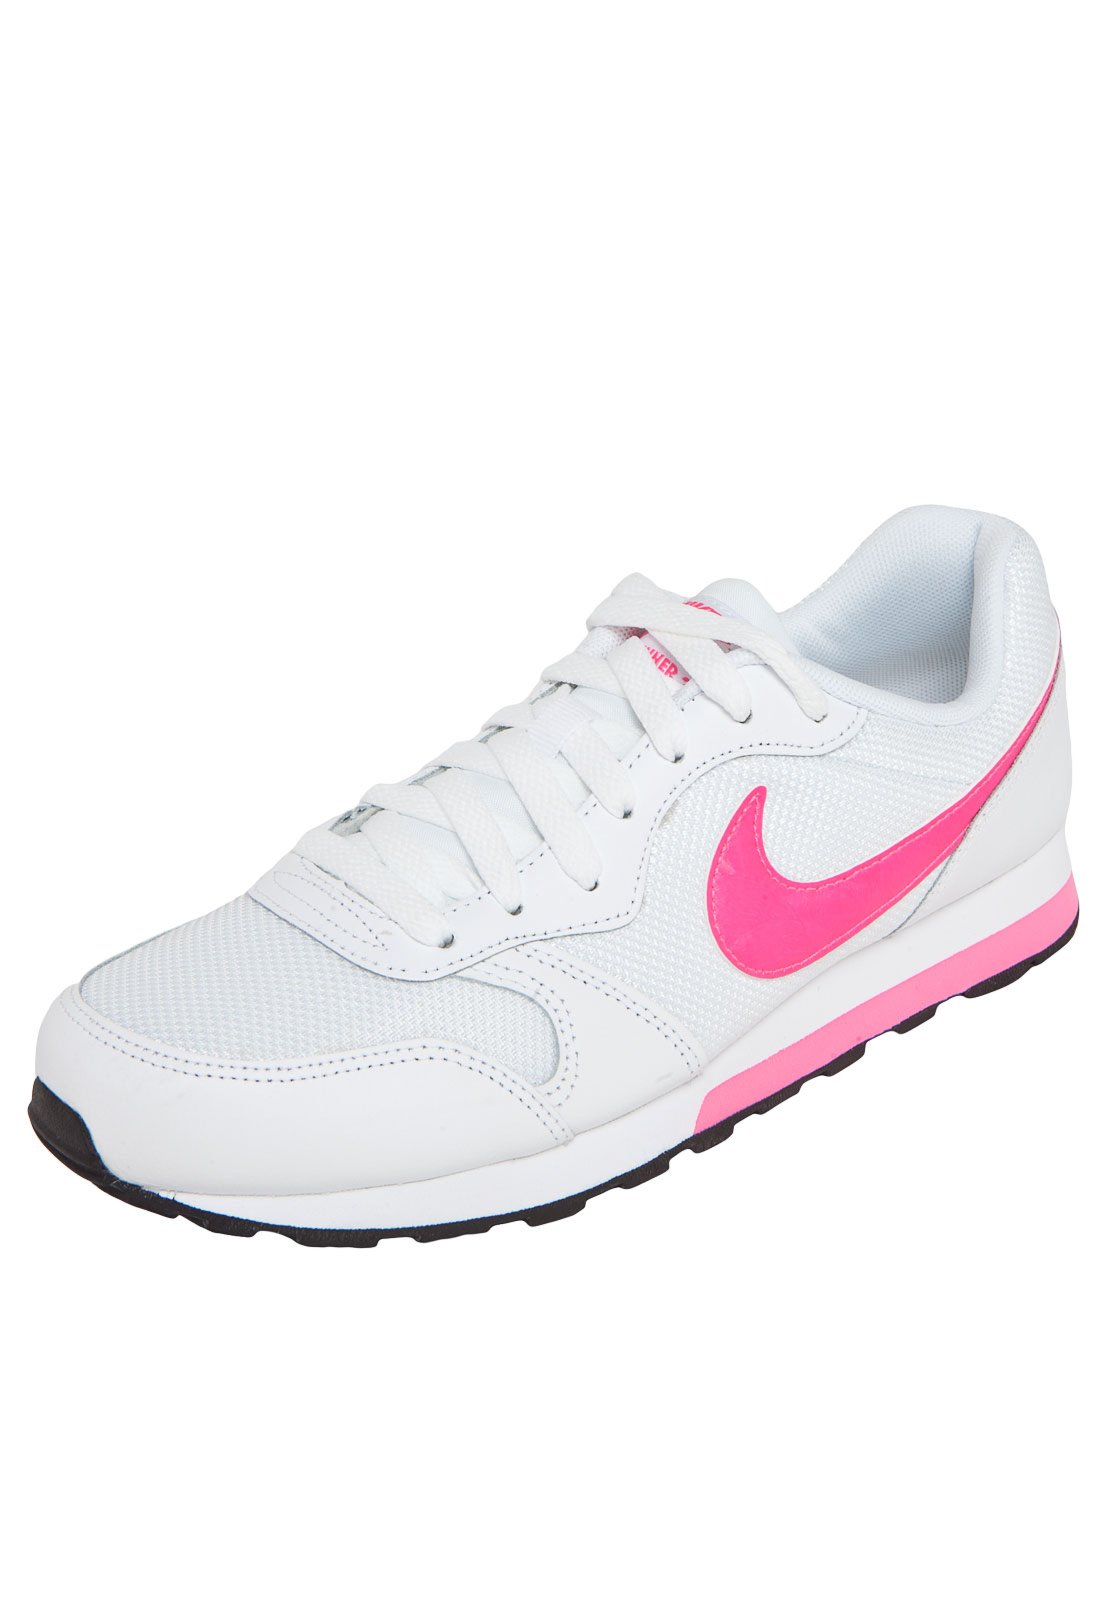 tenis nike branco com simbolo rosa